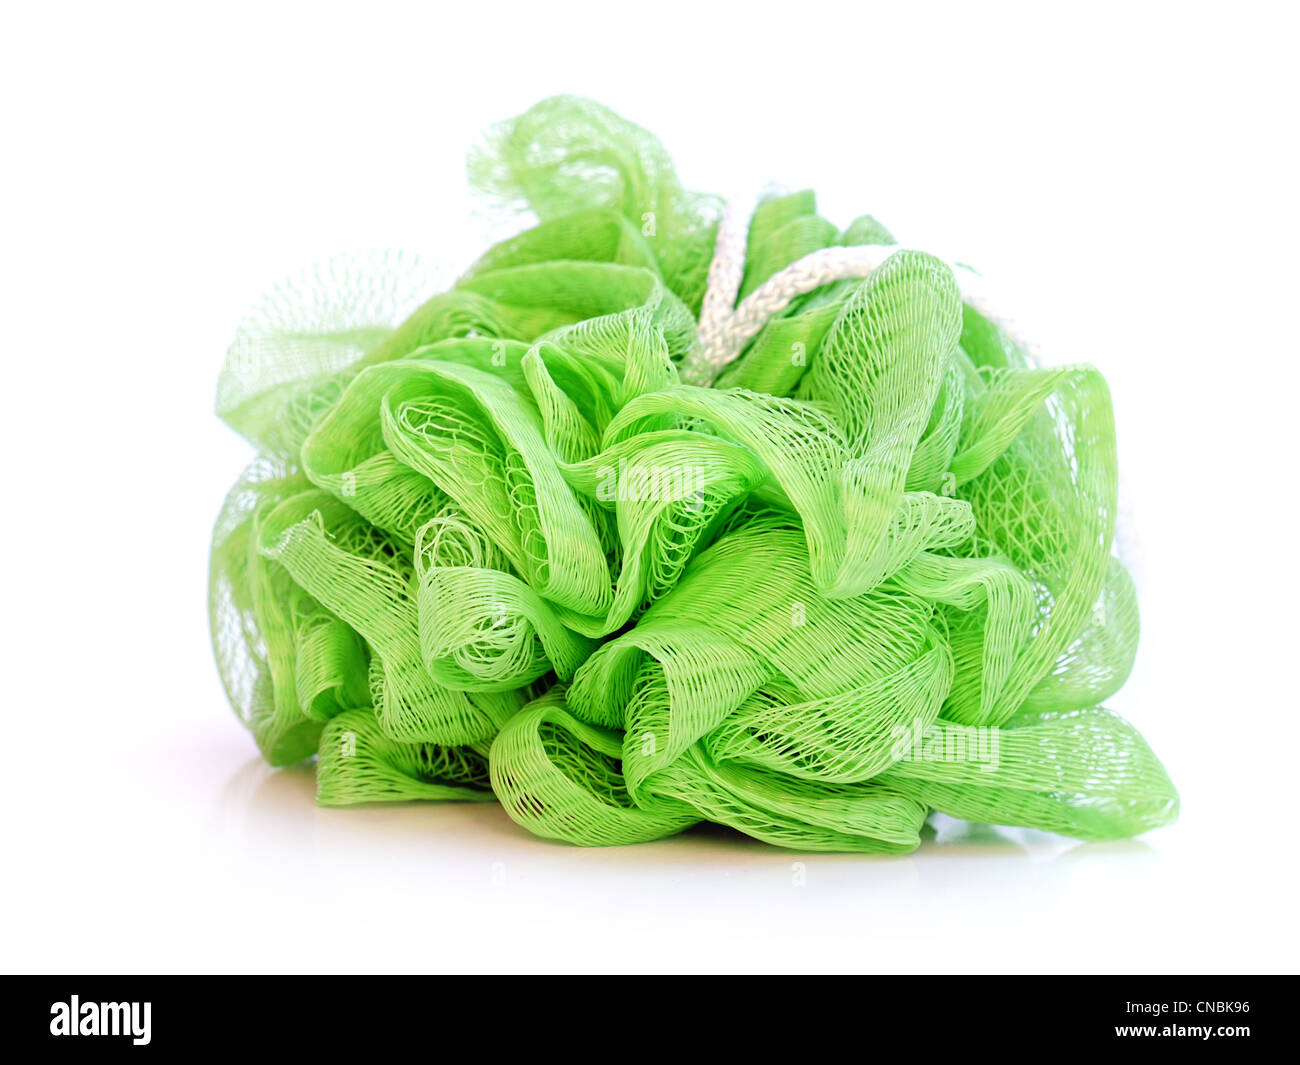 Green nylon bath washcloth on white background Stock Photo